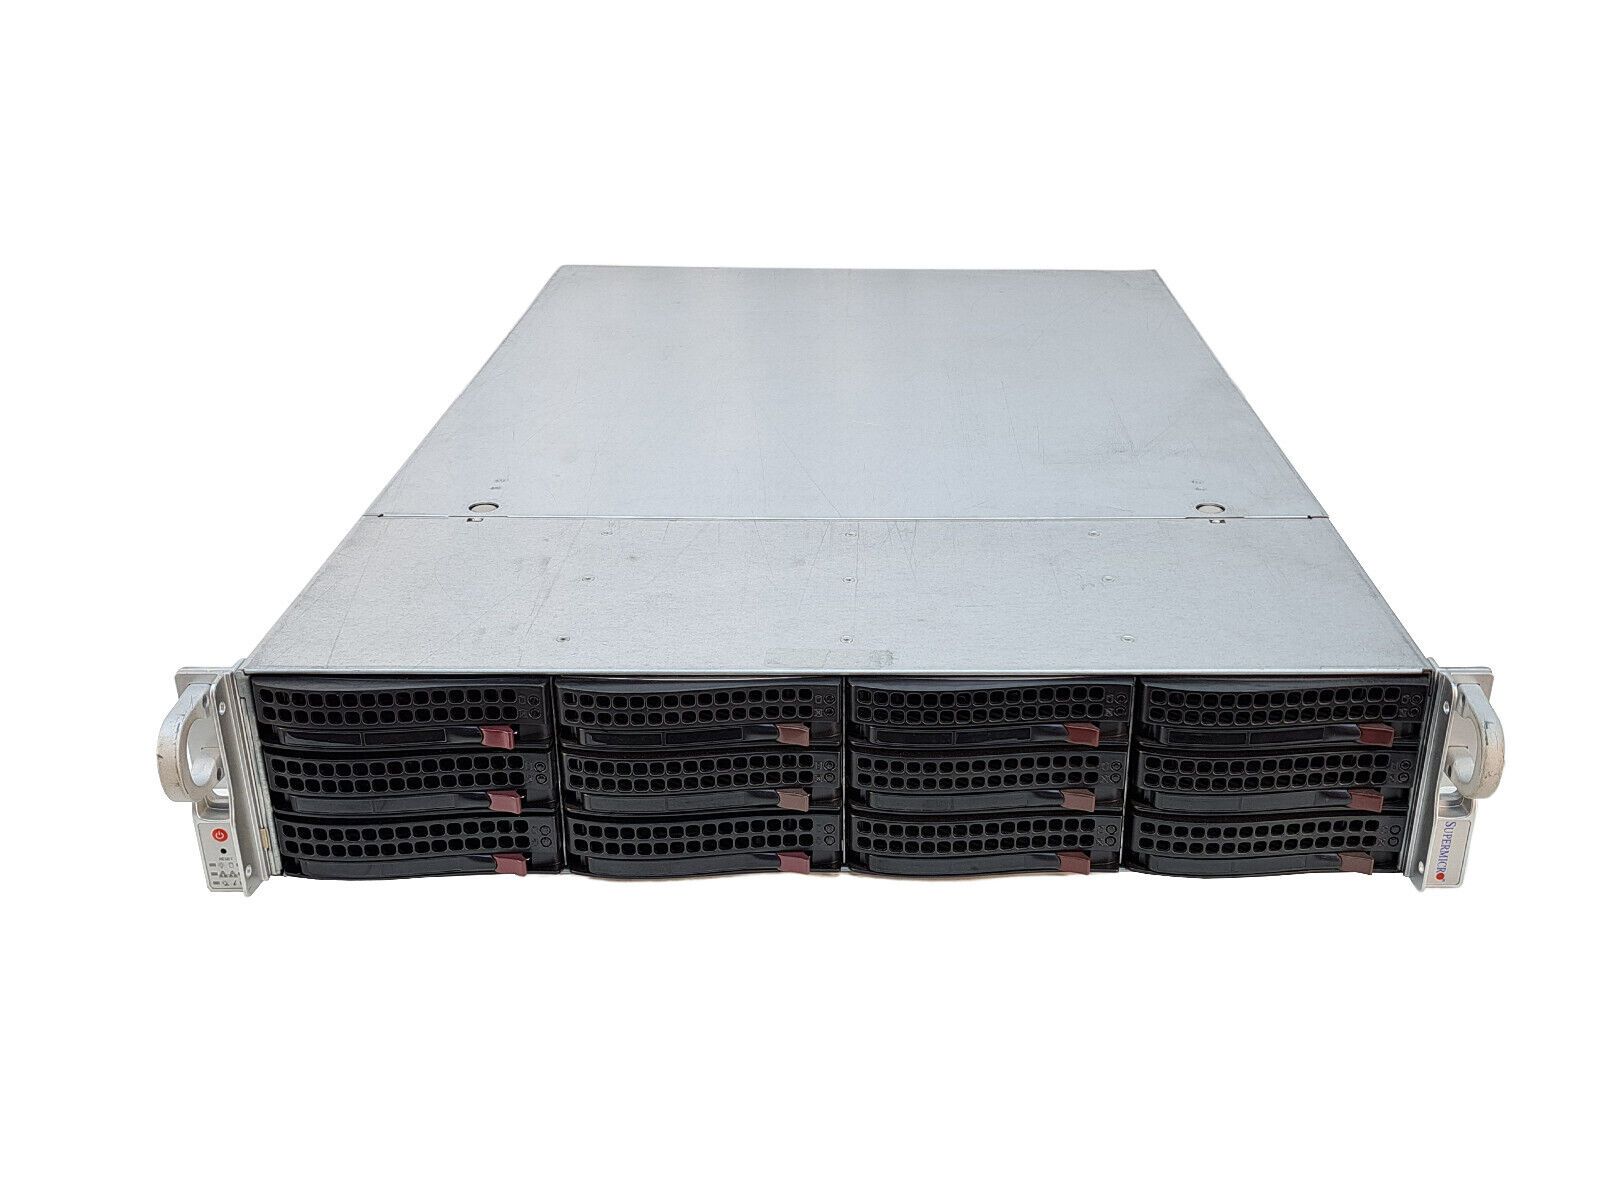 SuperMicro 6027R-E1R12N 12 Bay Barebone Server w/ X9DRi-LN4F Dual 920W PWS